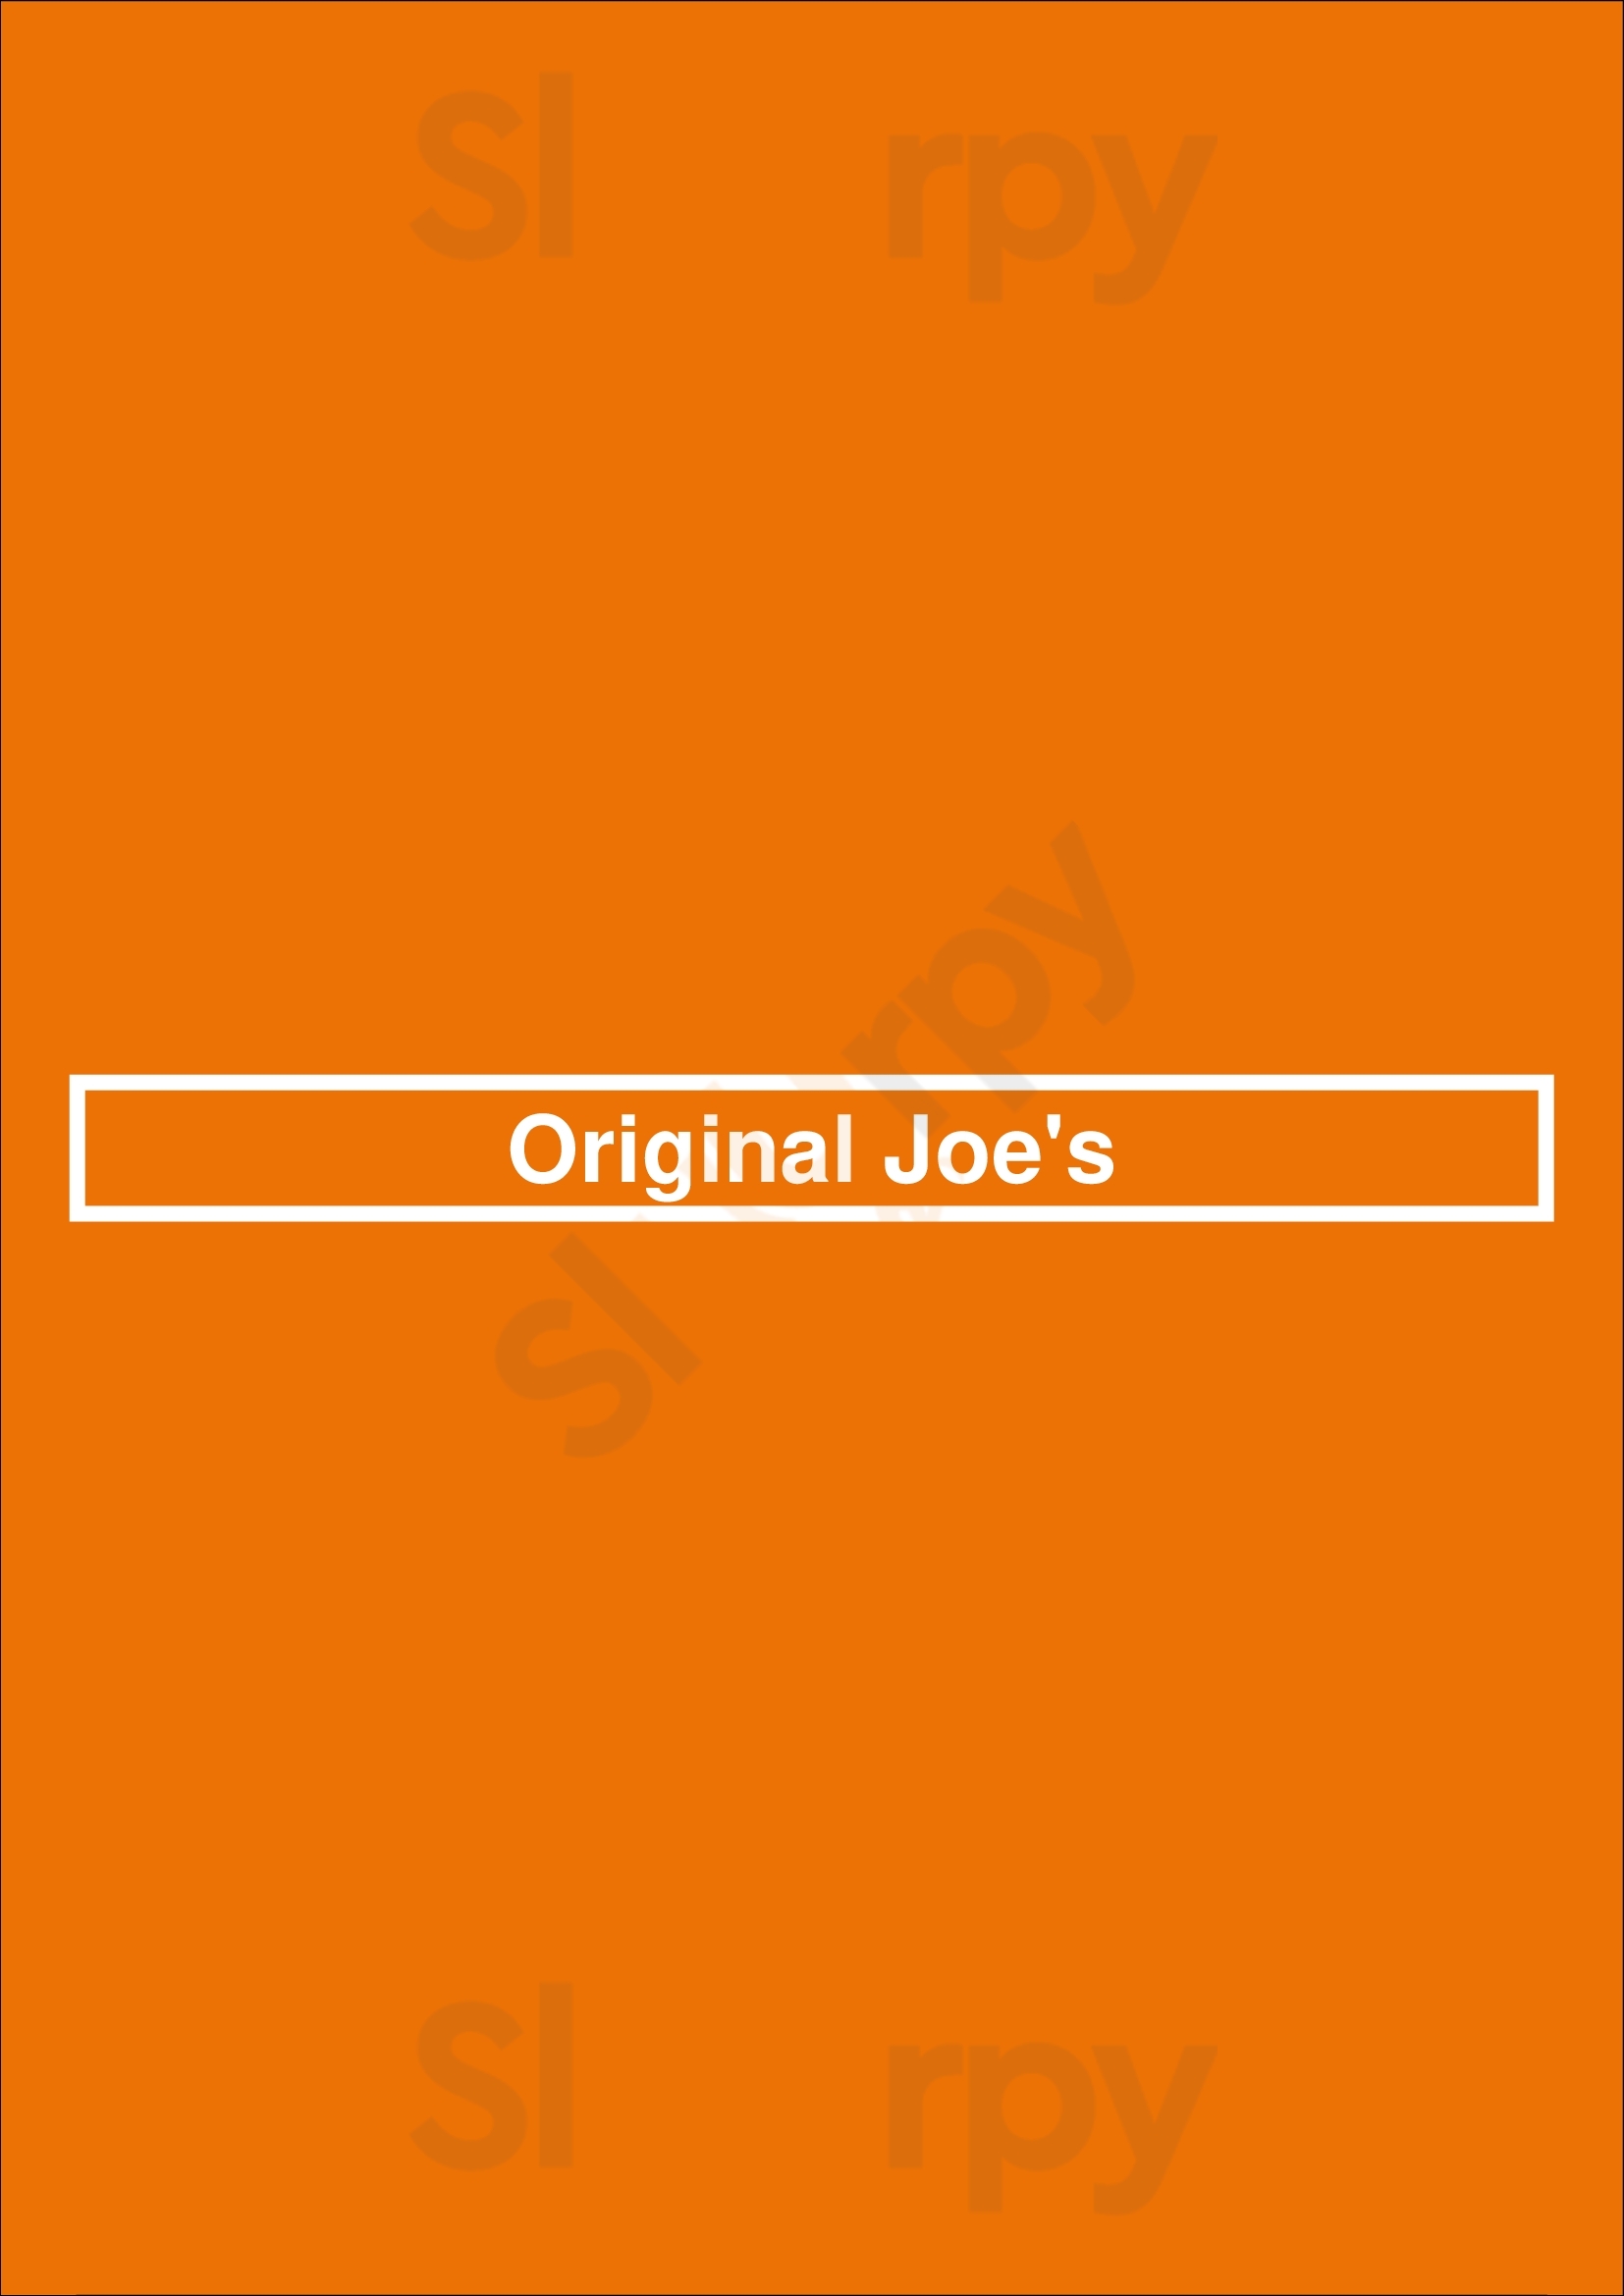 Original Joe's Airdrie Menu - 1